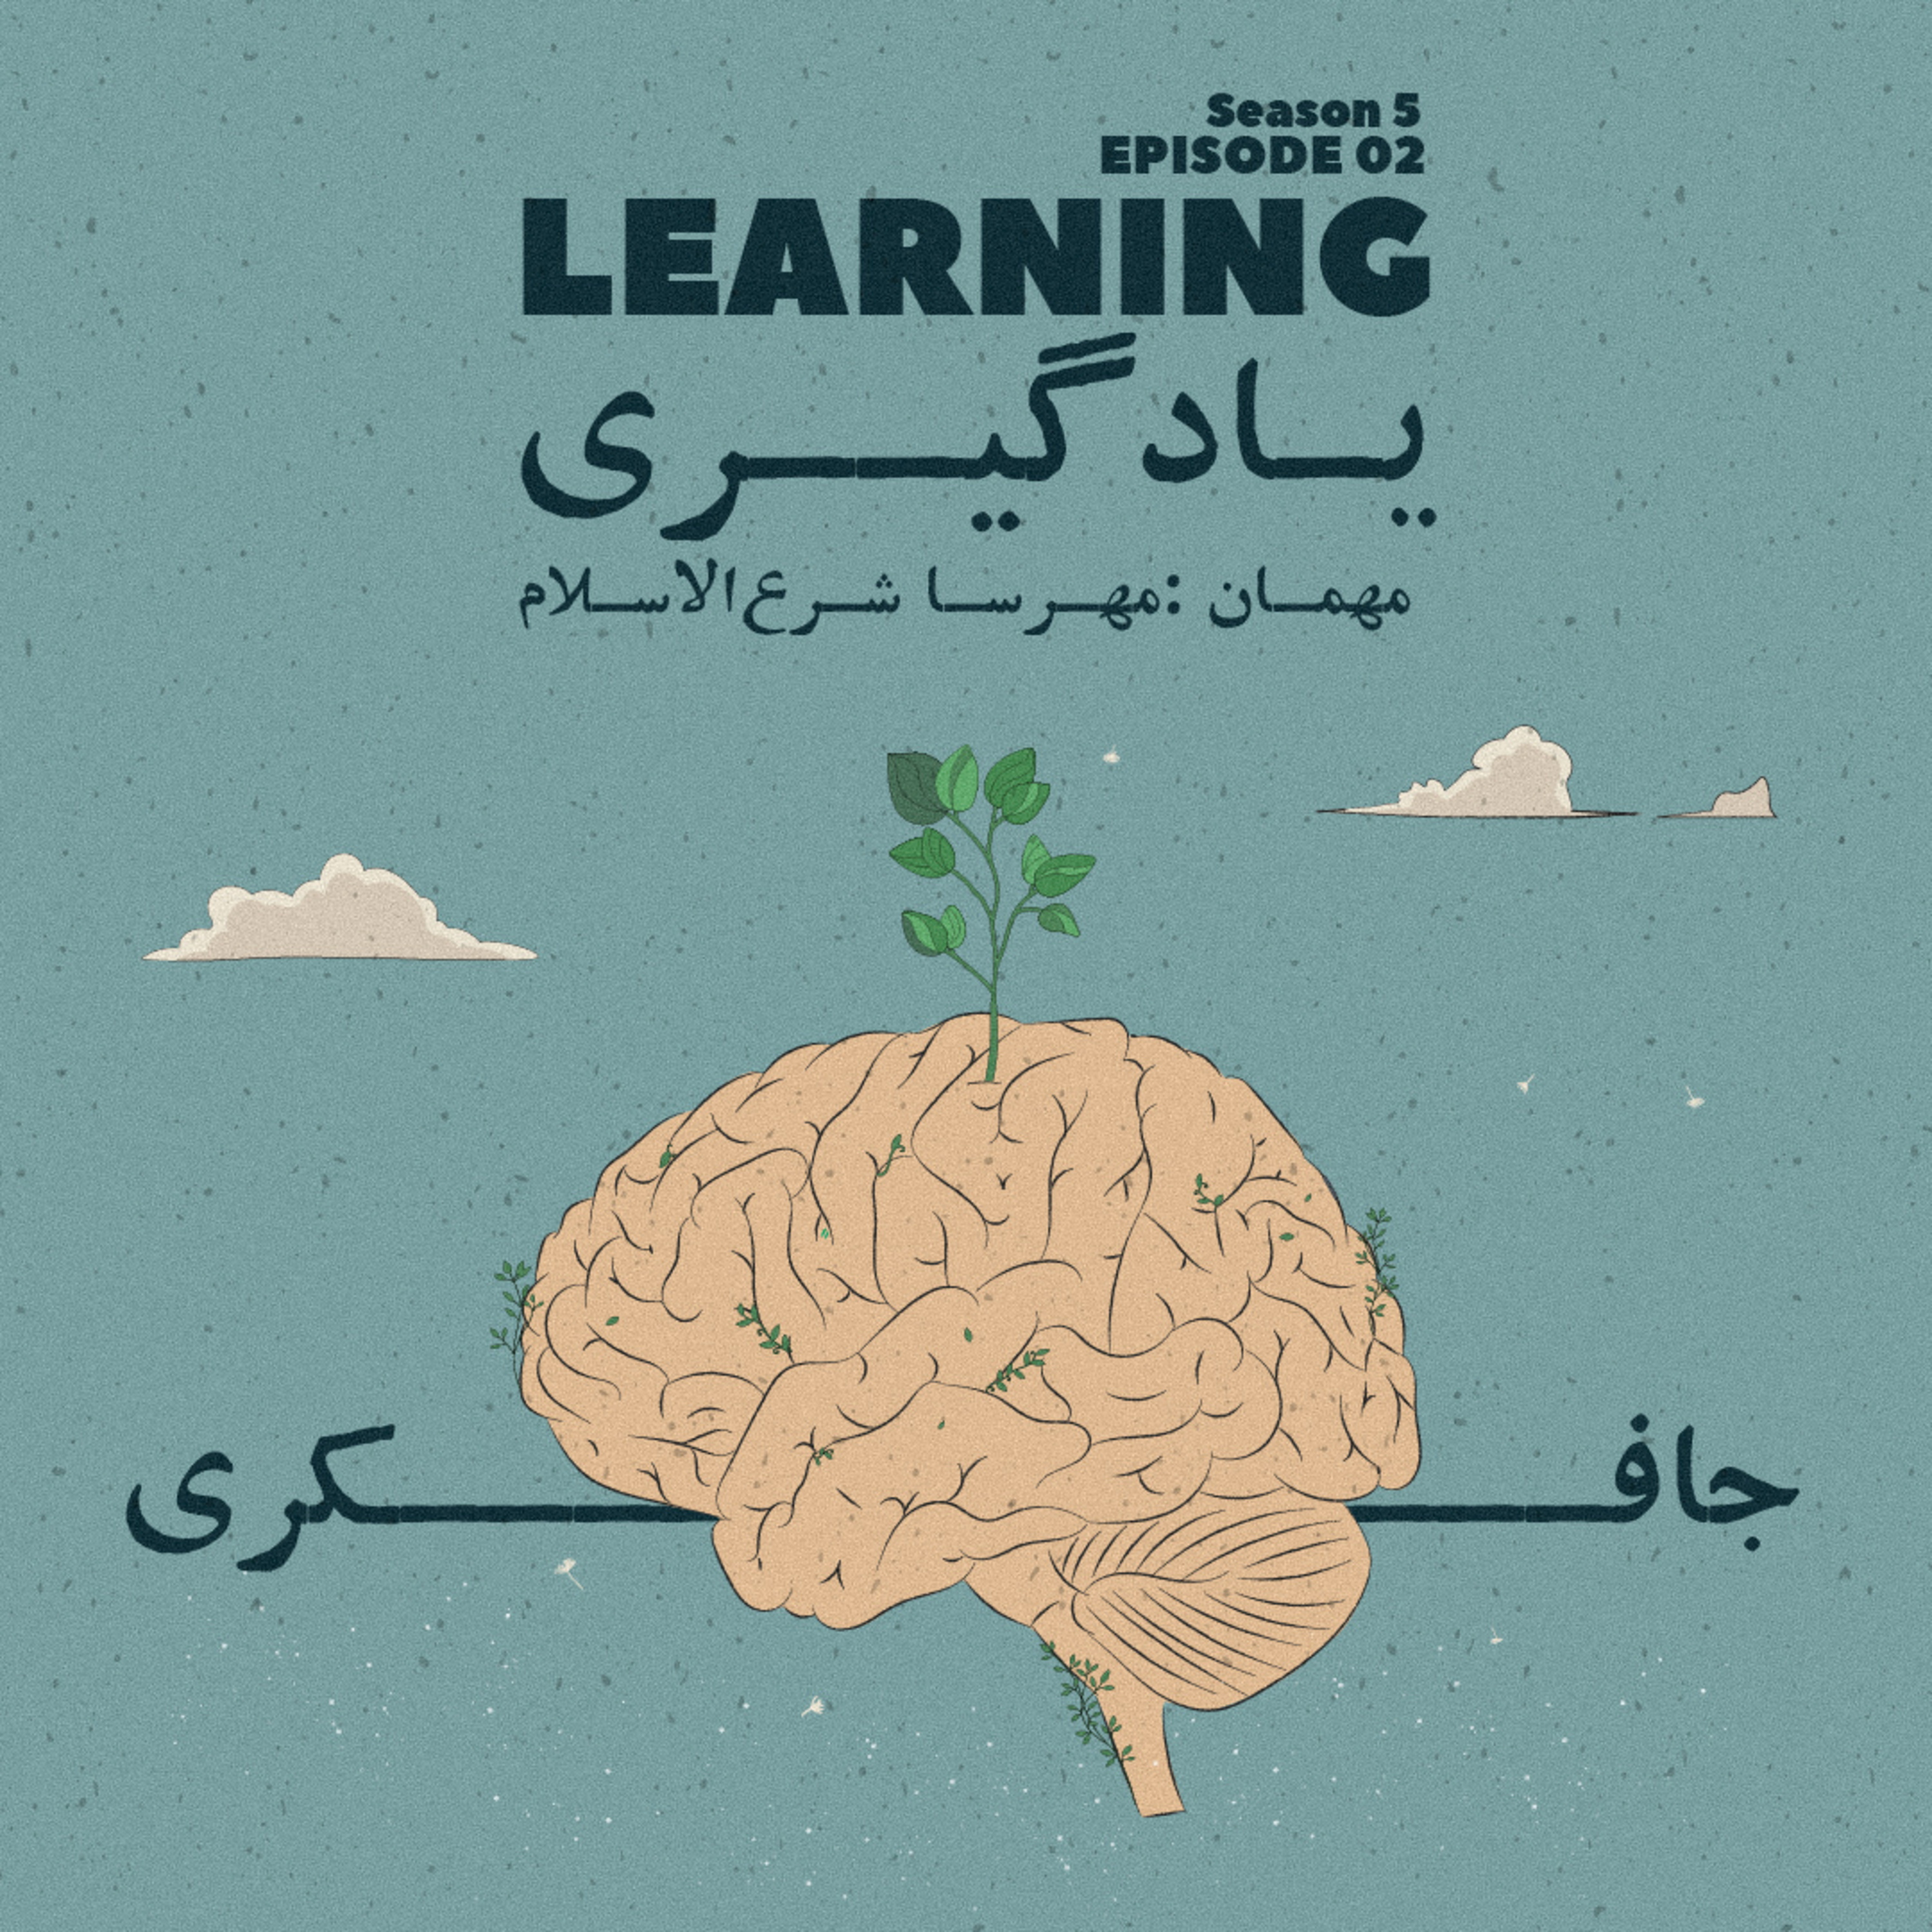 Episode 02 - Learning (یادگیری)